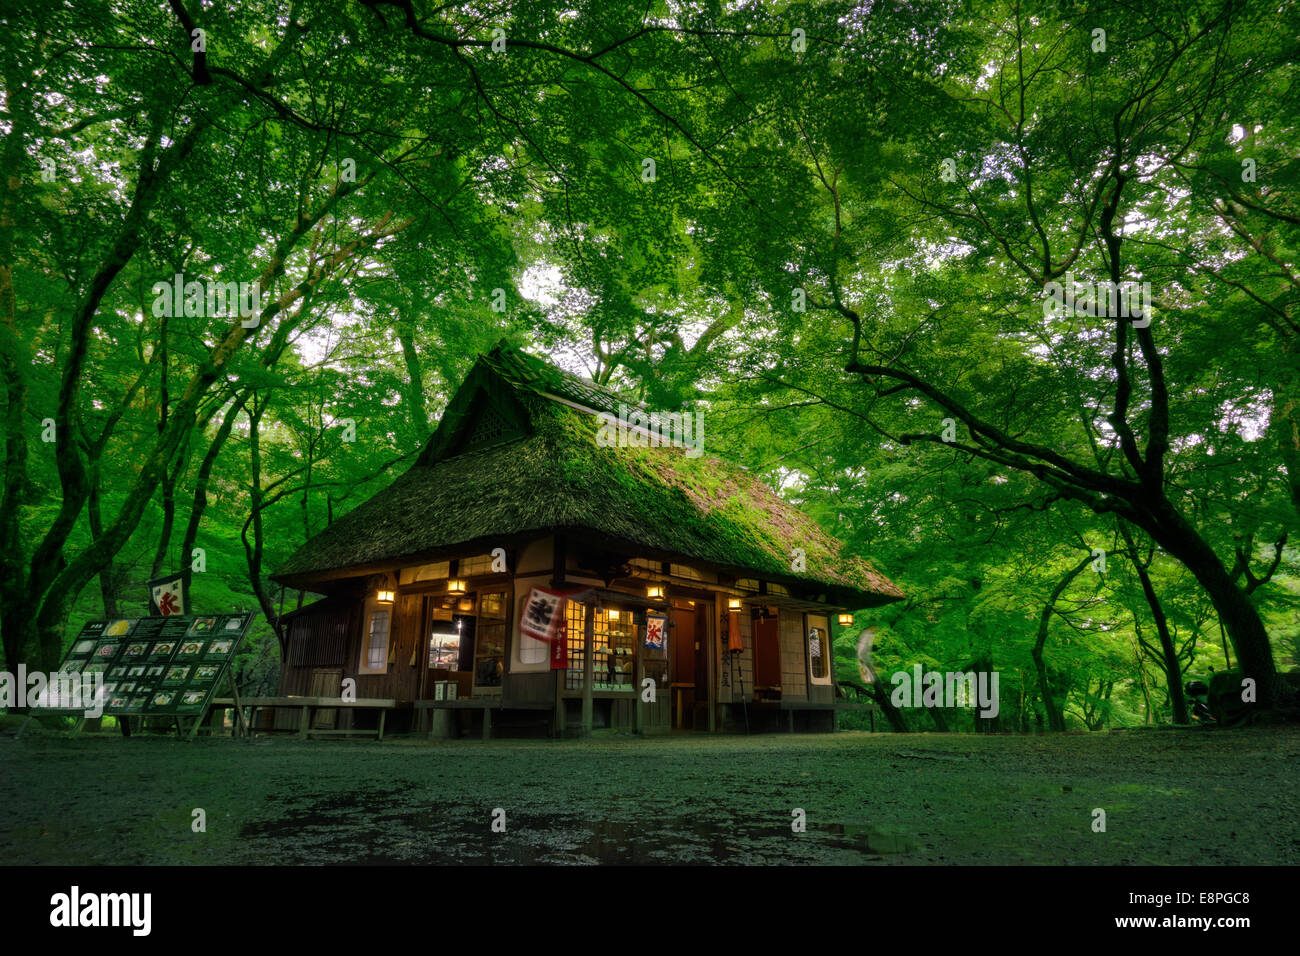 The traditional little old Mizuya Chaya Tea House in Nara Park, Japan in the lush forest near Kasuga Grand Shrine Stock Photo